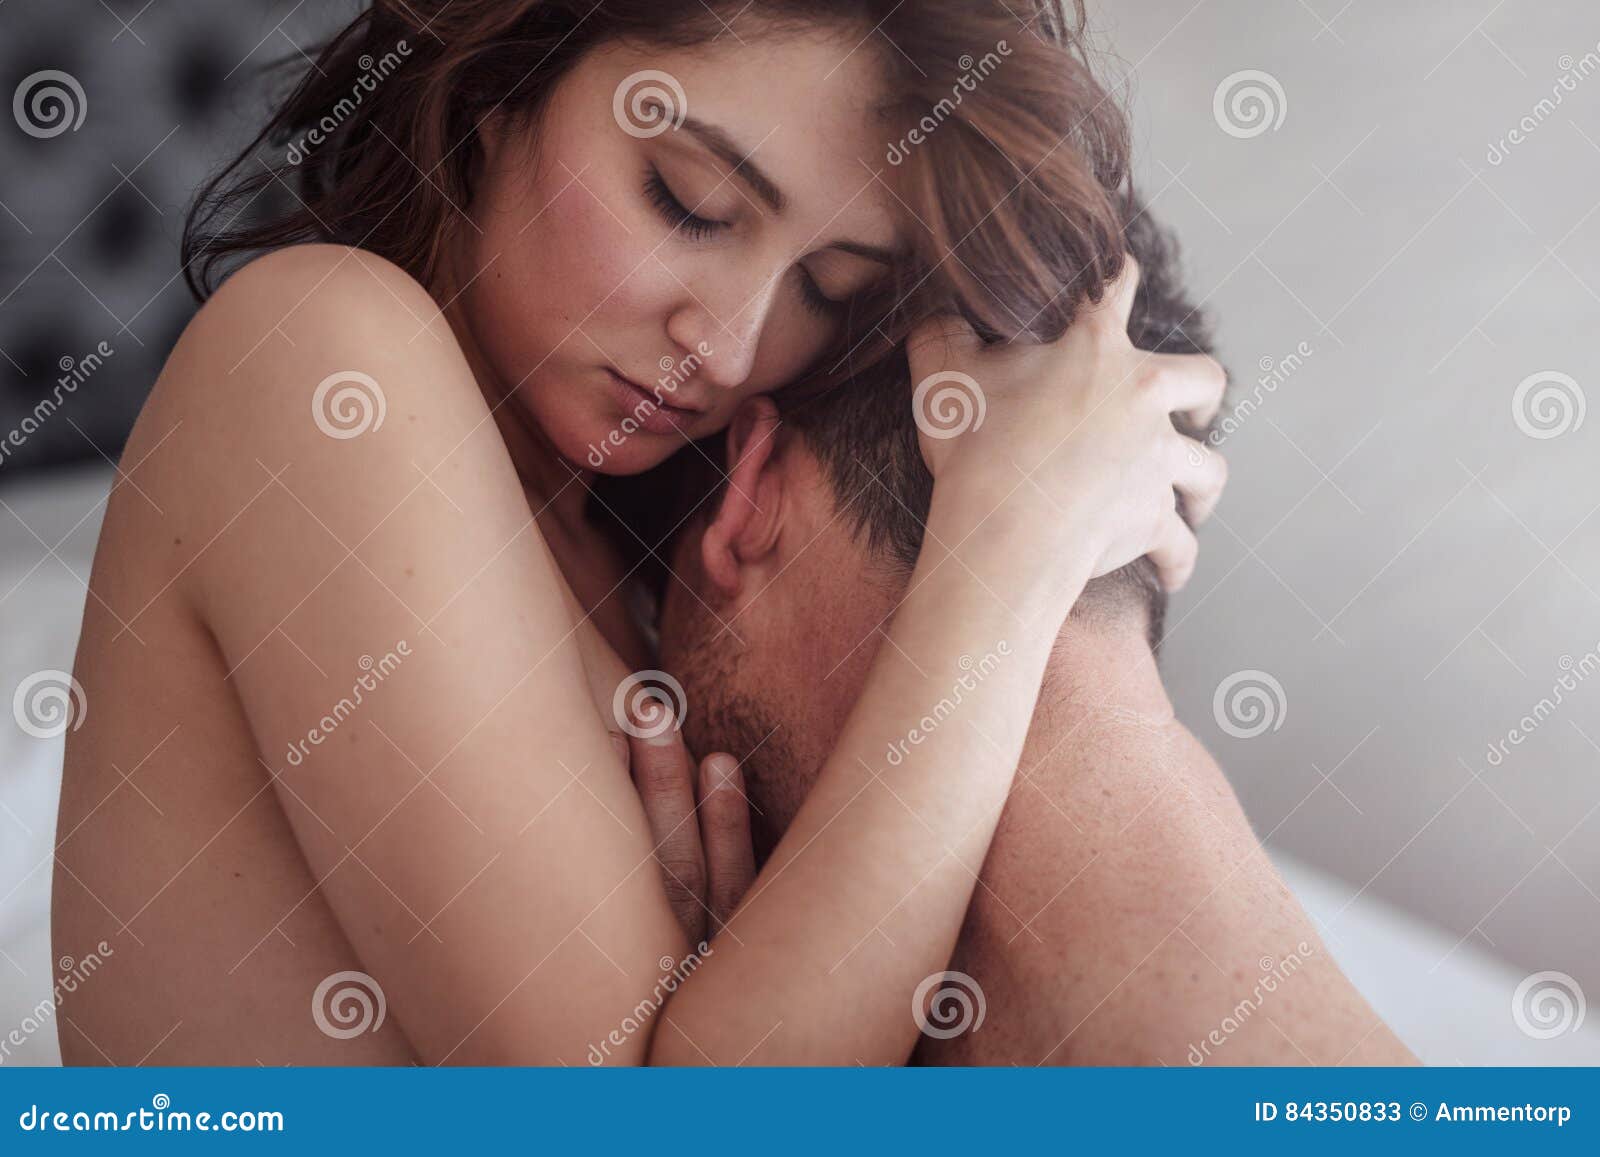 cardell brownridge share sensual sex for women photos